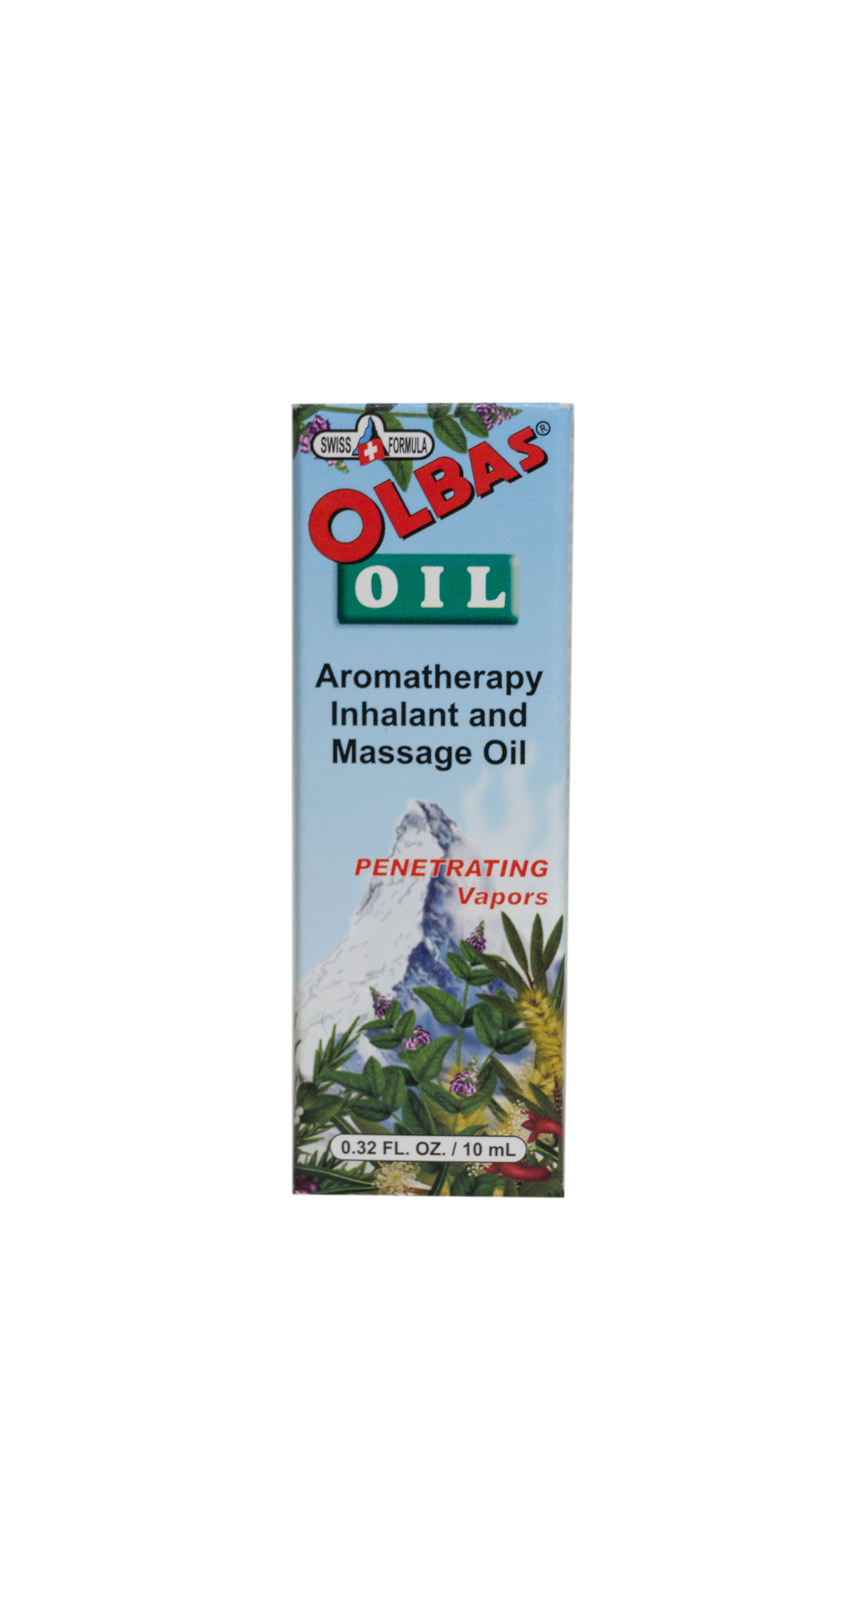 Olbas - Aromatherapy Inhalant and Massage Oil